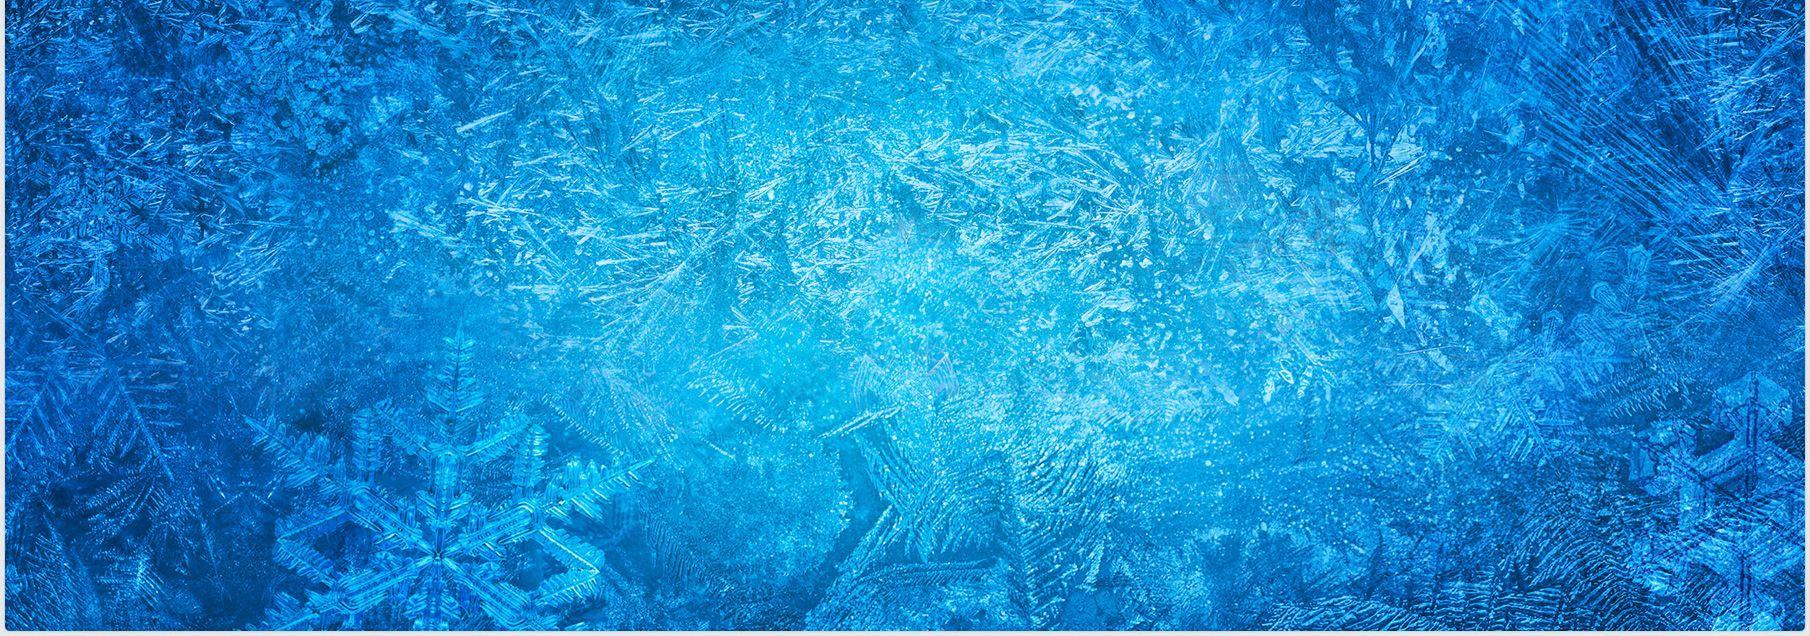 Disney Frozen Background image